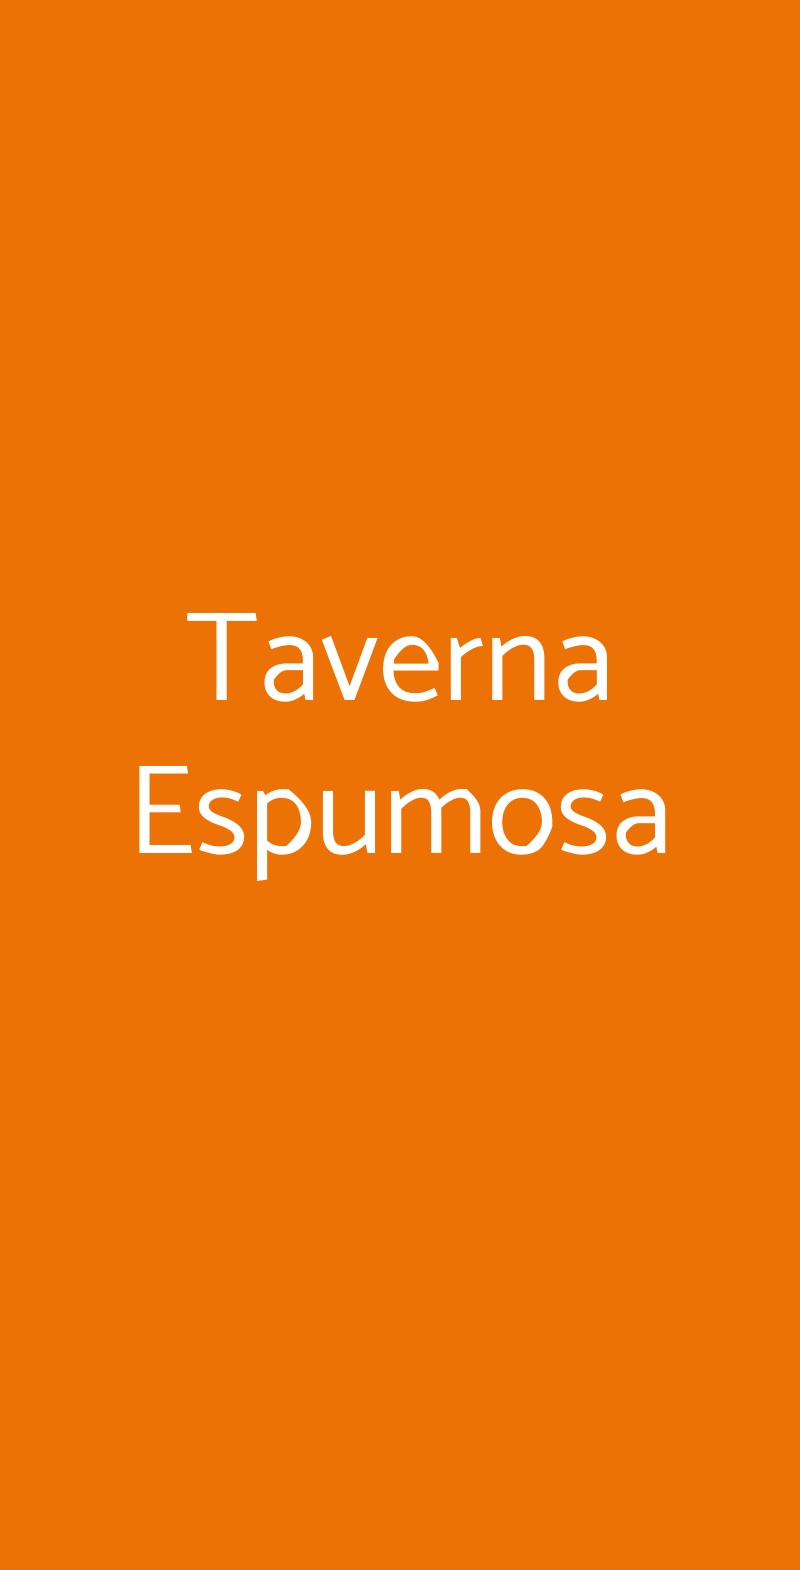 Taverna Espumosa Parma menù 1 pagina